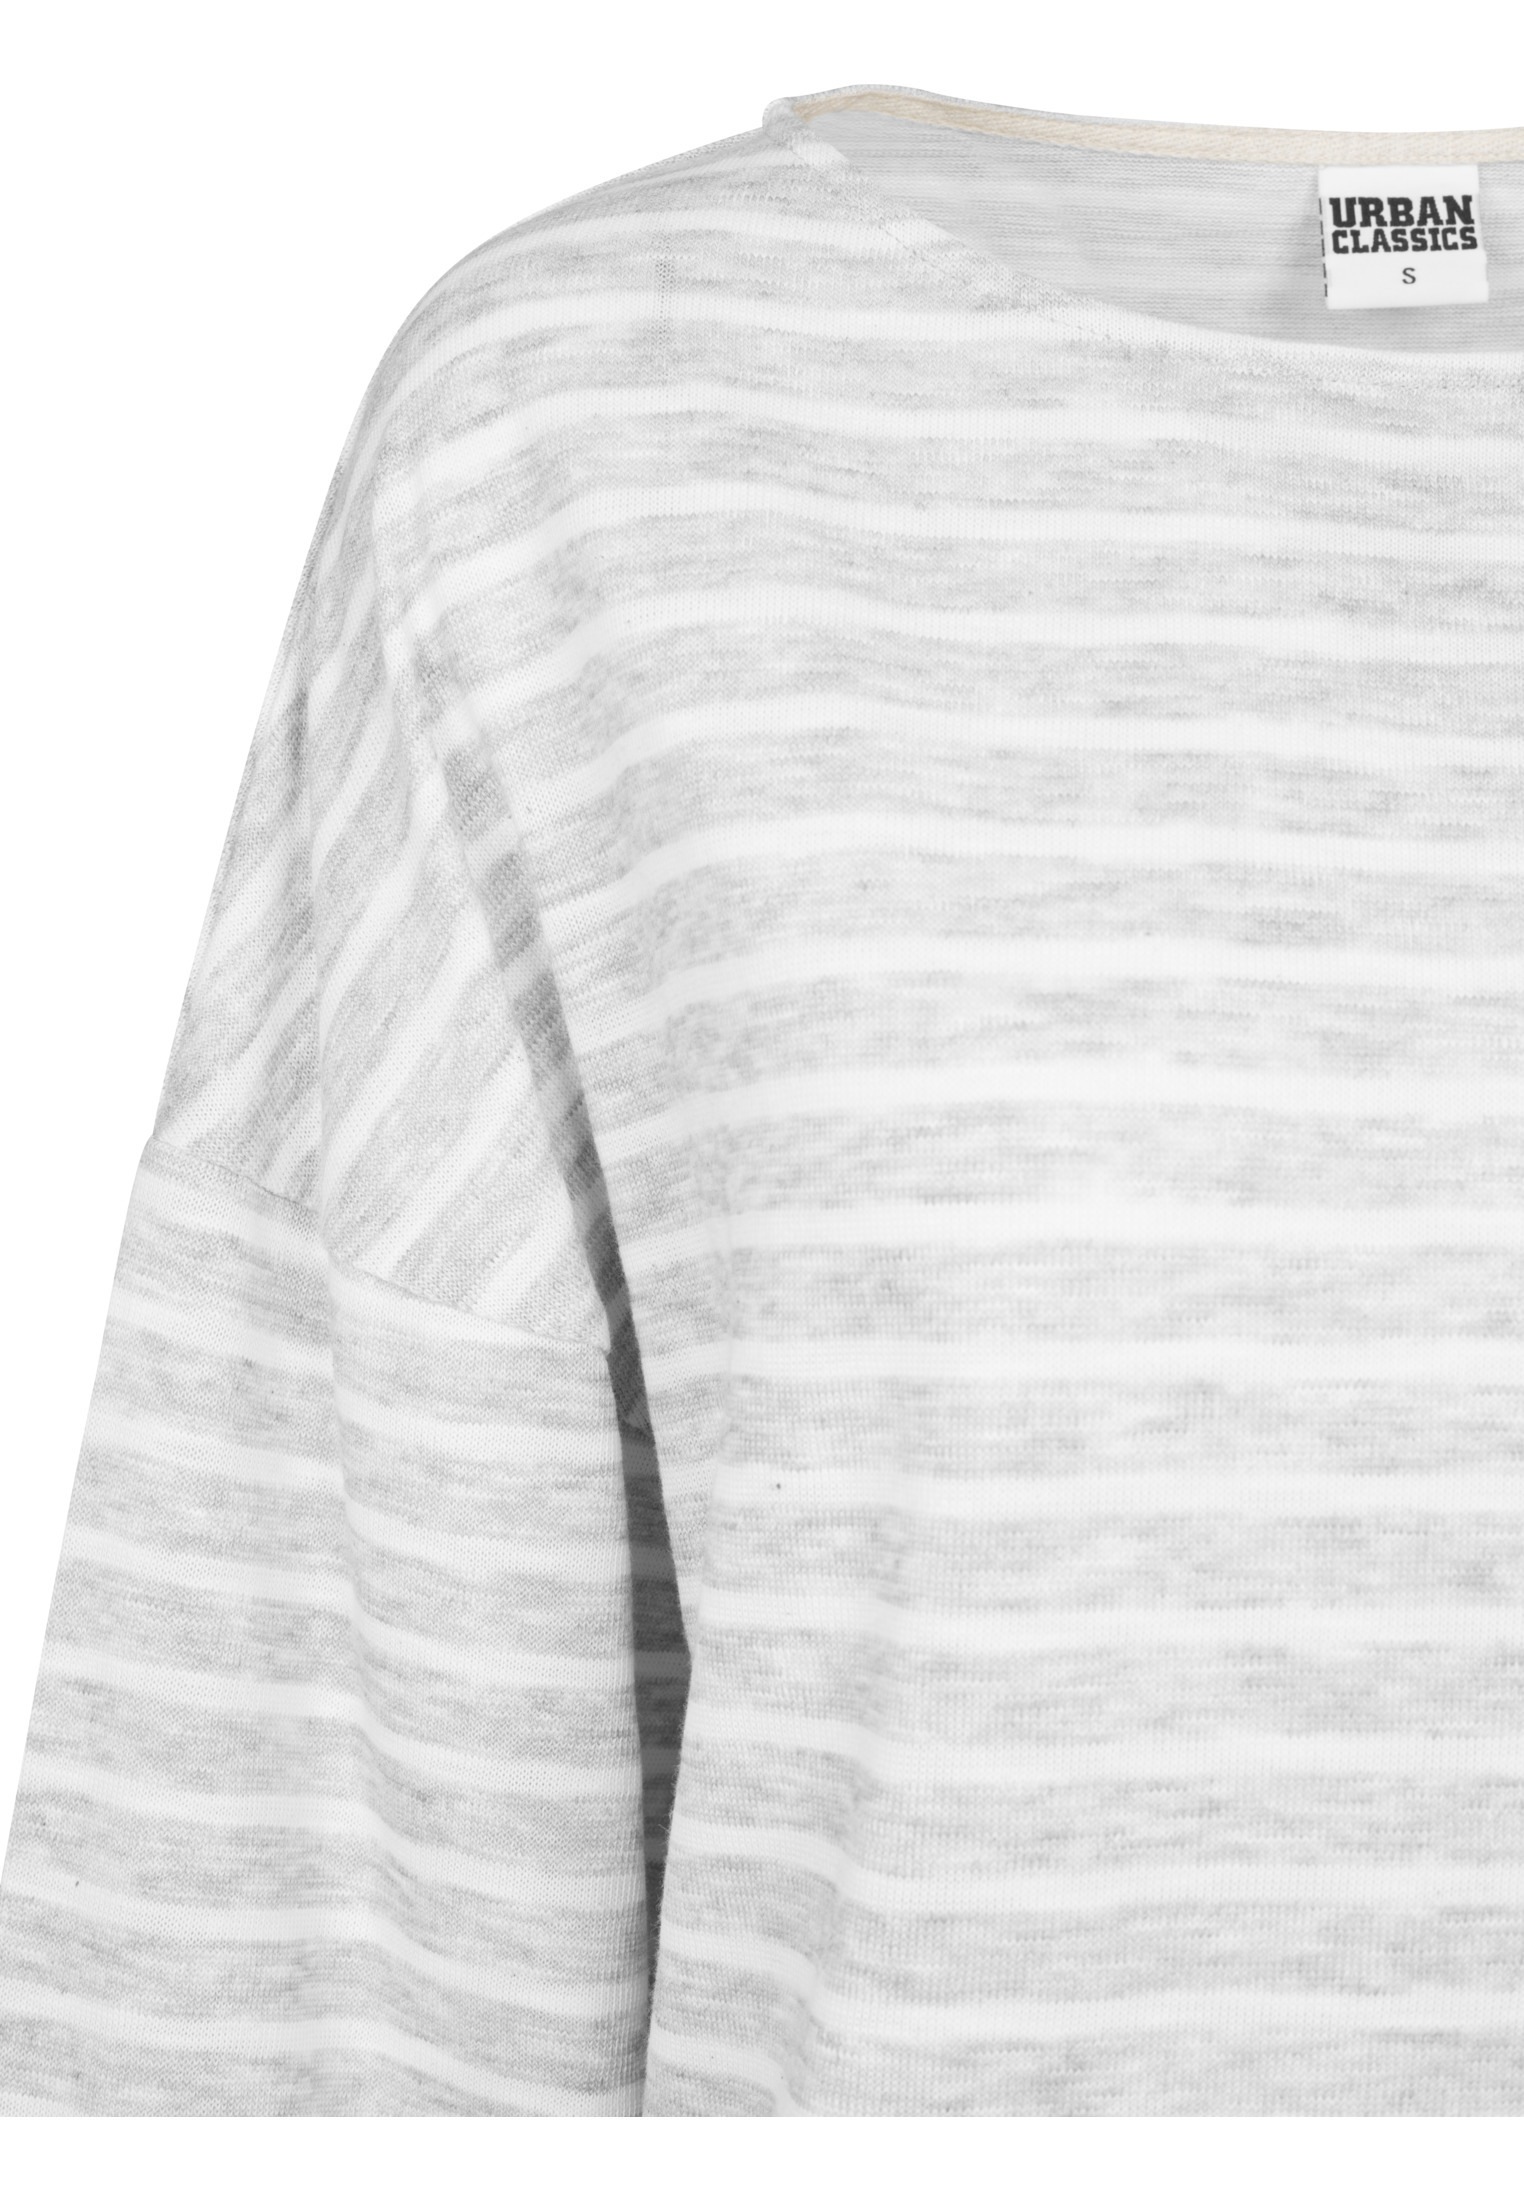 »Damen bestellen BAUR Ladies URBAN (1 Stripe Oversize Sweater | Pullover«, CLASSICS tlg.)